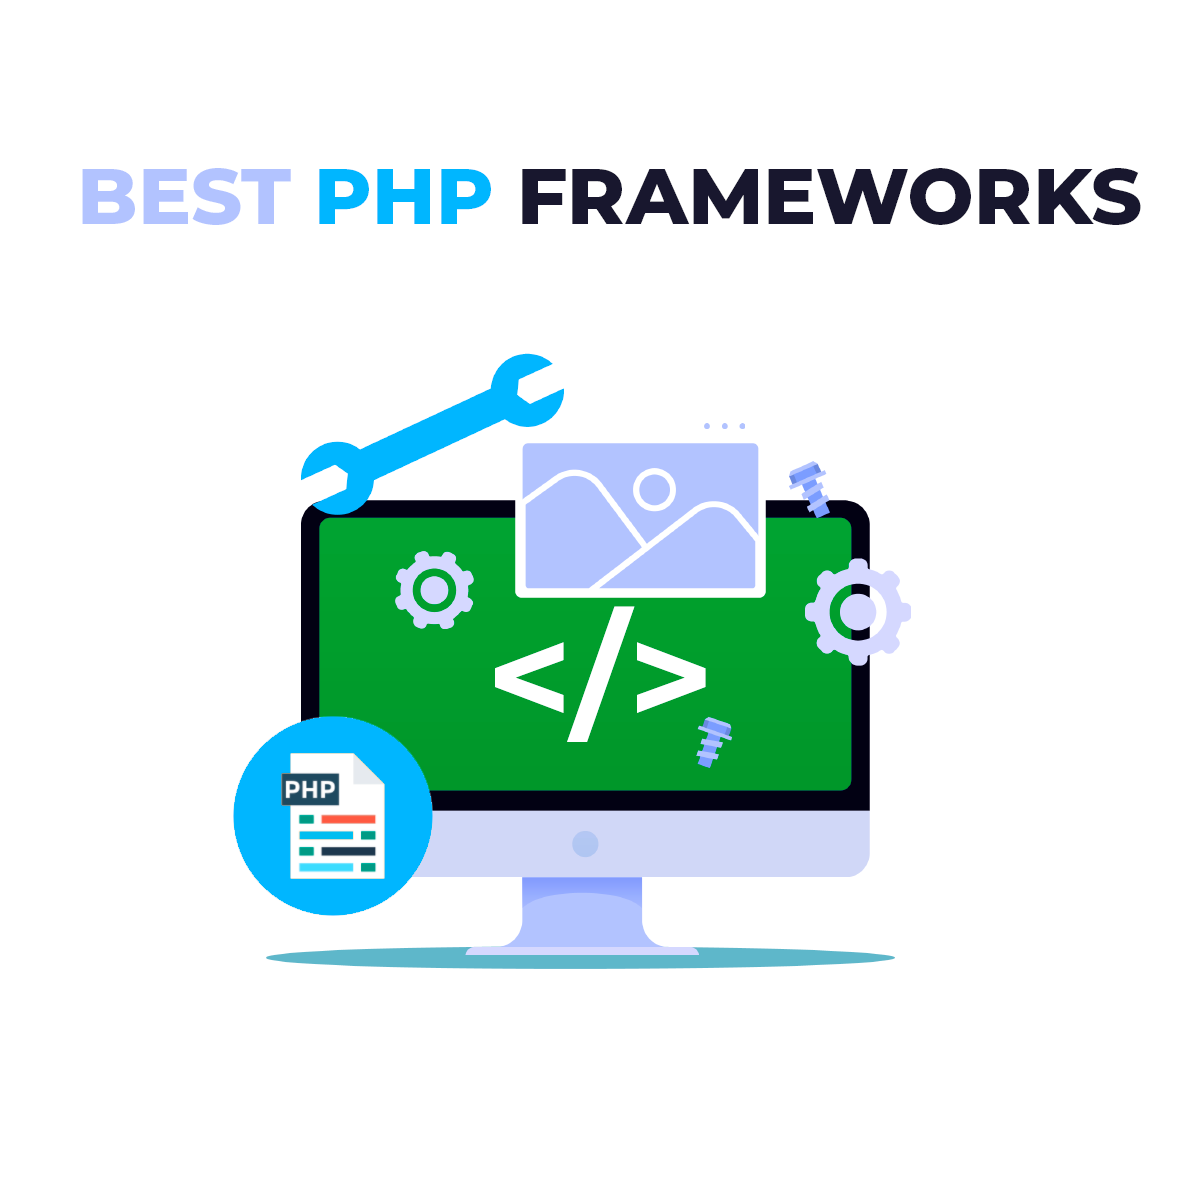 Best PHP frameworks for 2021